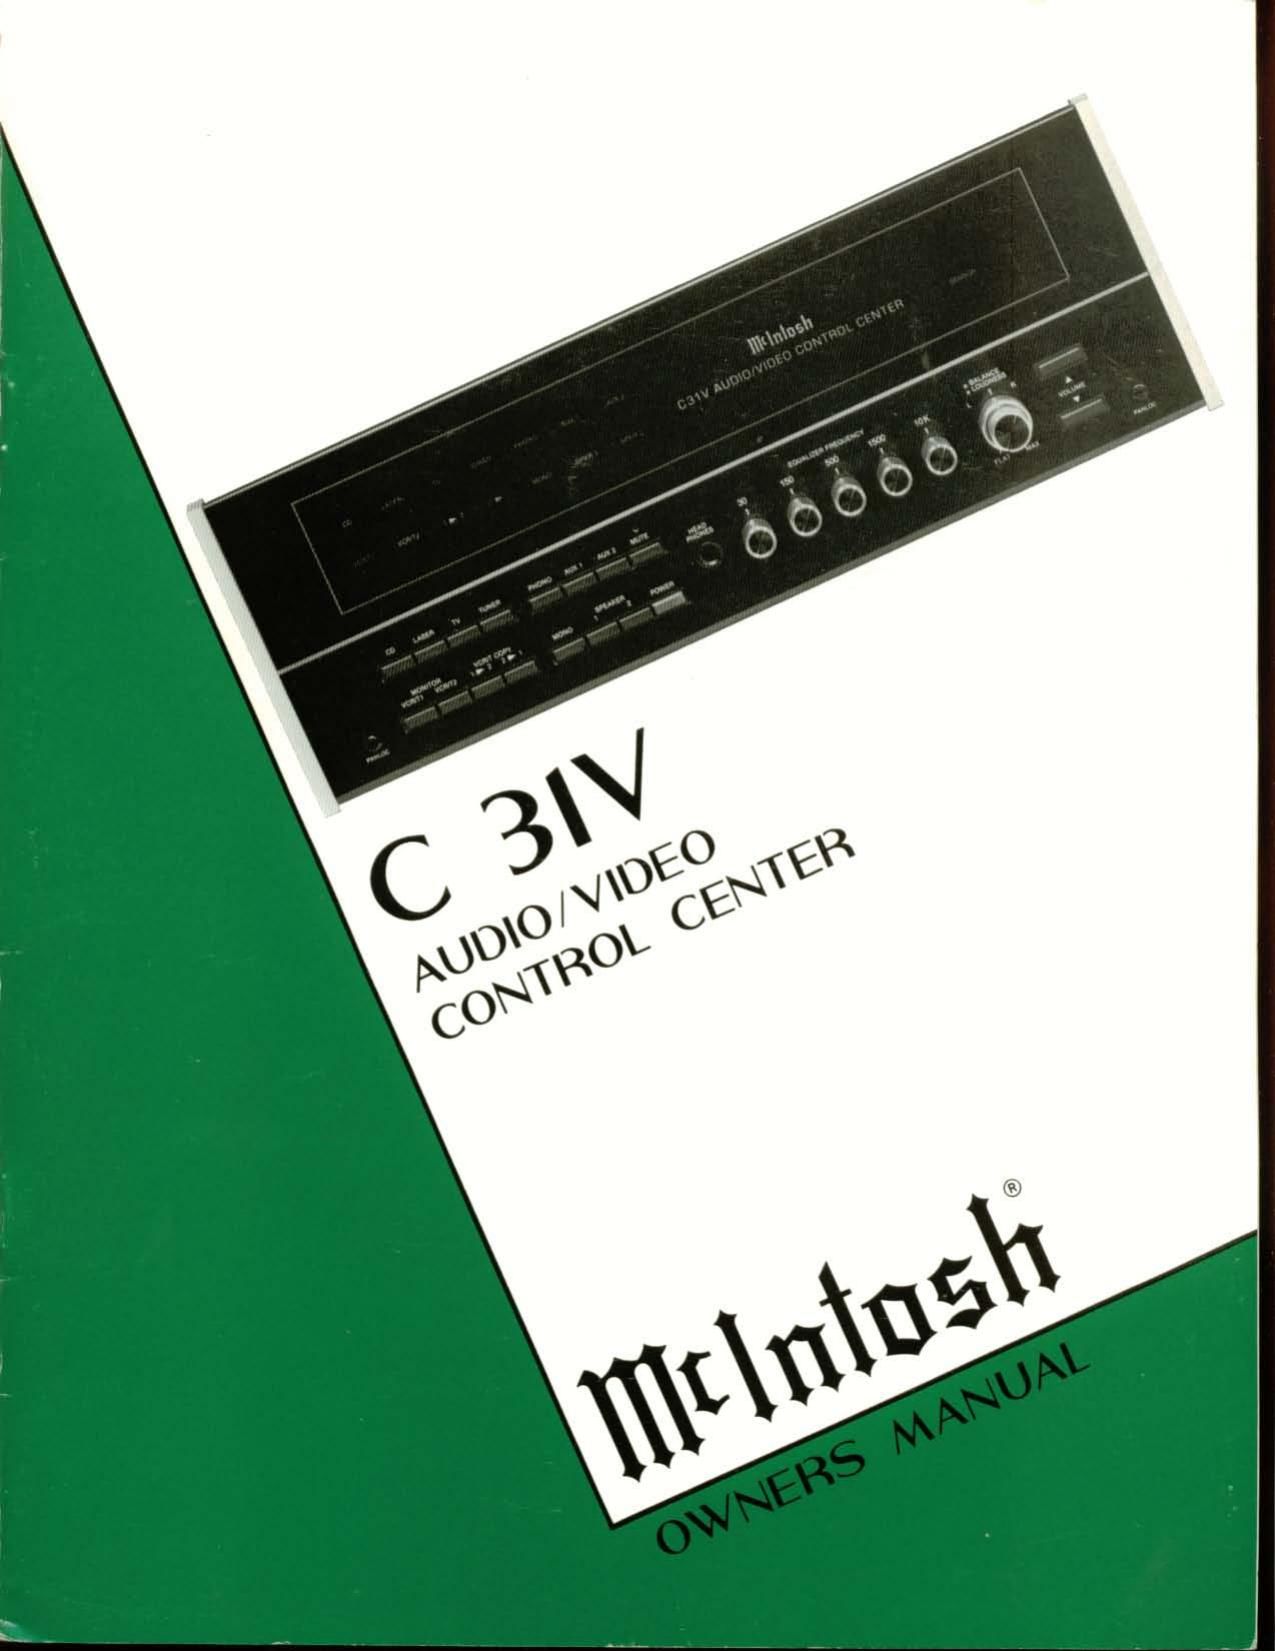 McIntosh C 31 V Owners Manual